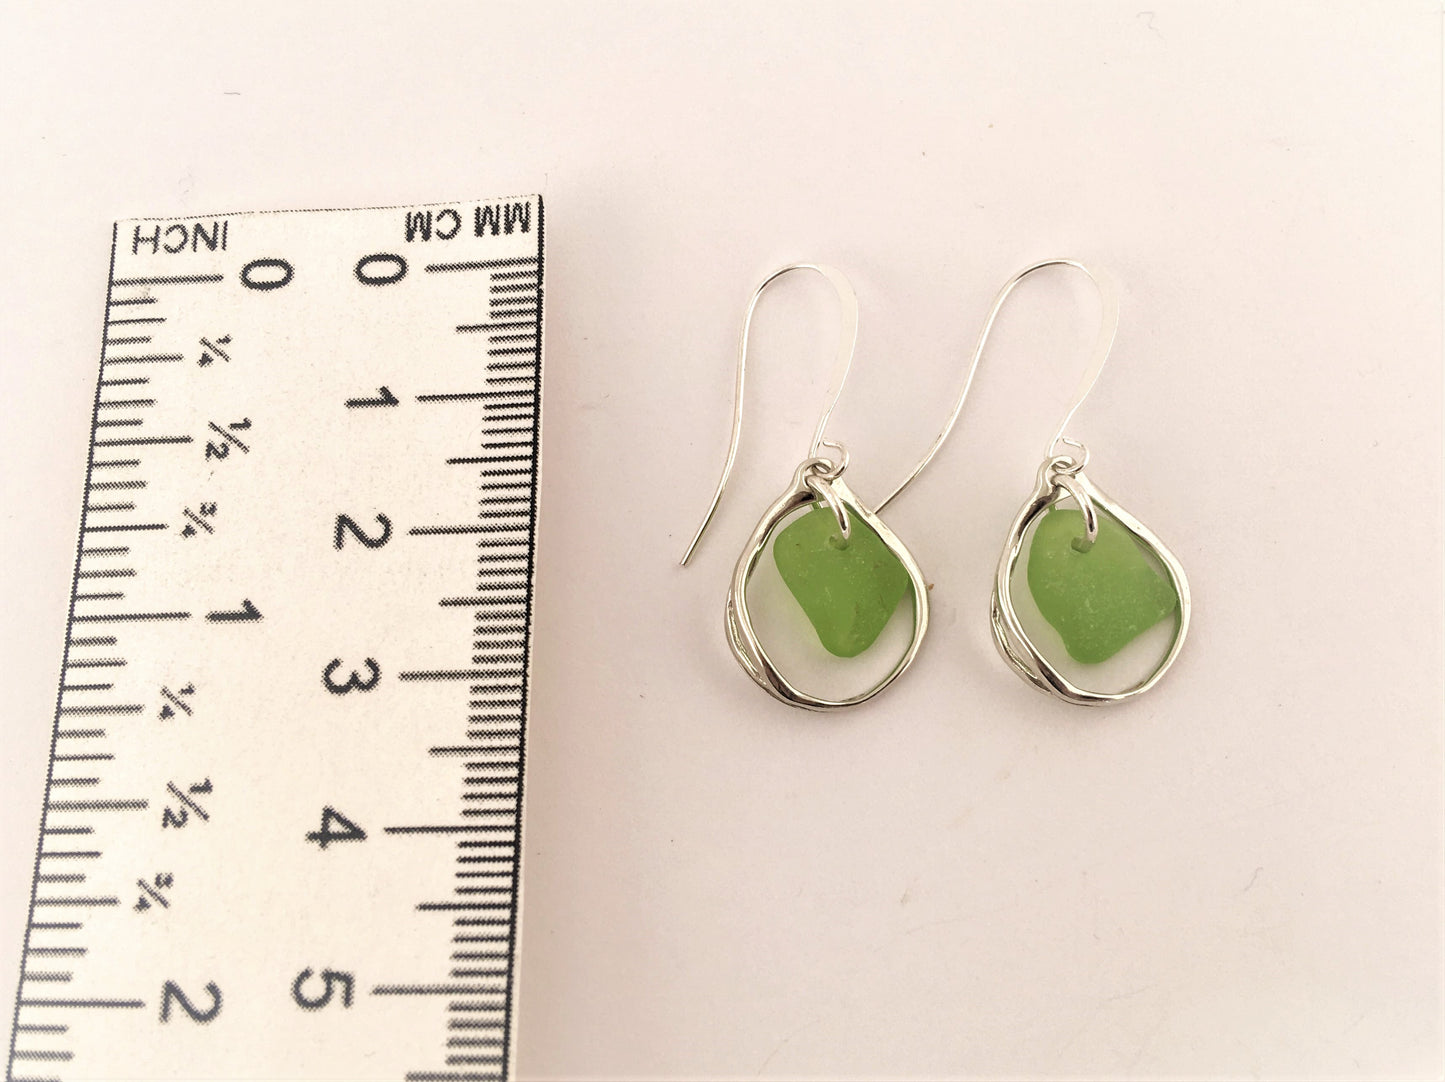 Heaven on Earth Earrings - Green Sea Glass from Cape Breton, Nova Scotia, Canada and Sterling Silver